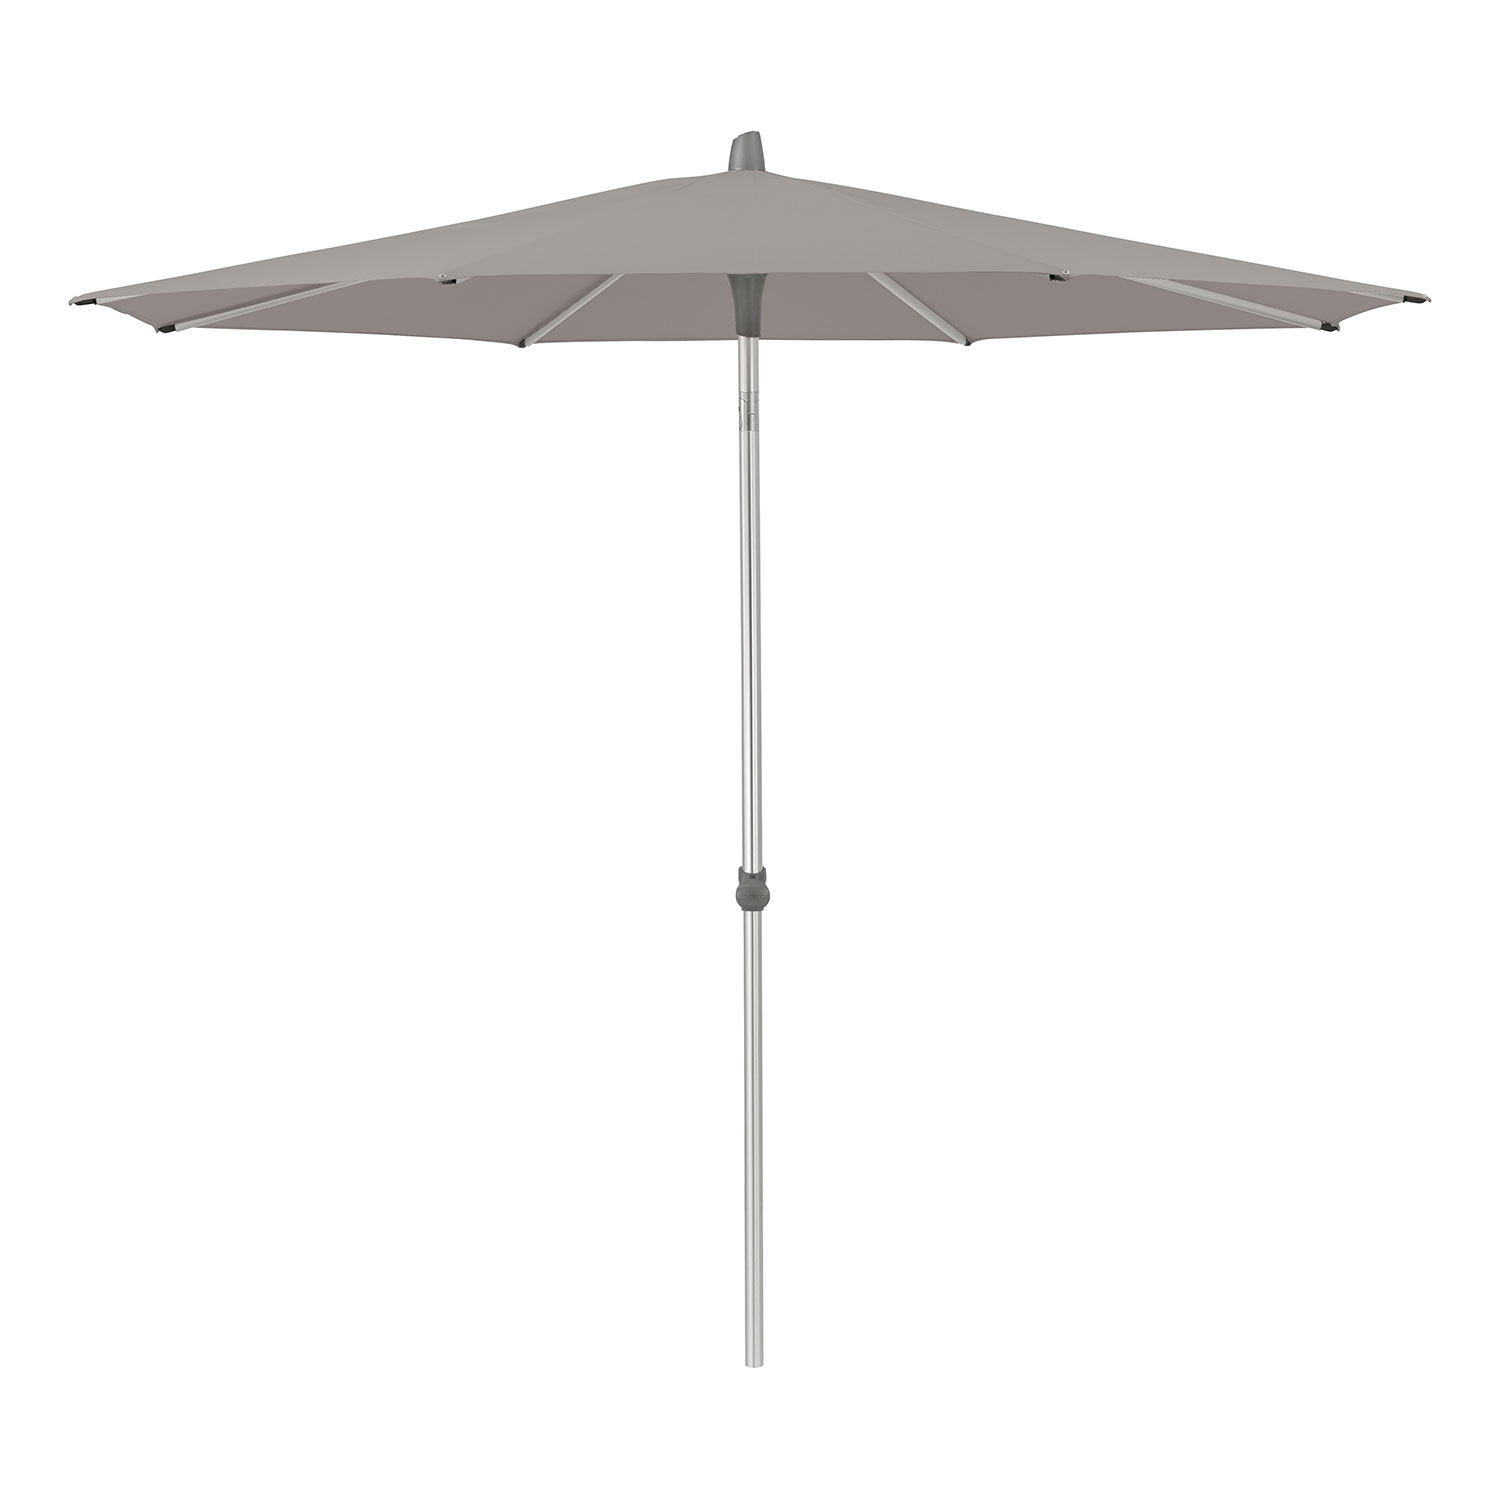 Glatz Alu-smart parasoll 220 cm kat.5 686 urban clay